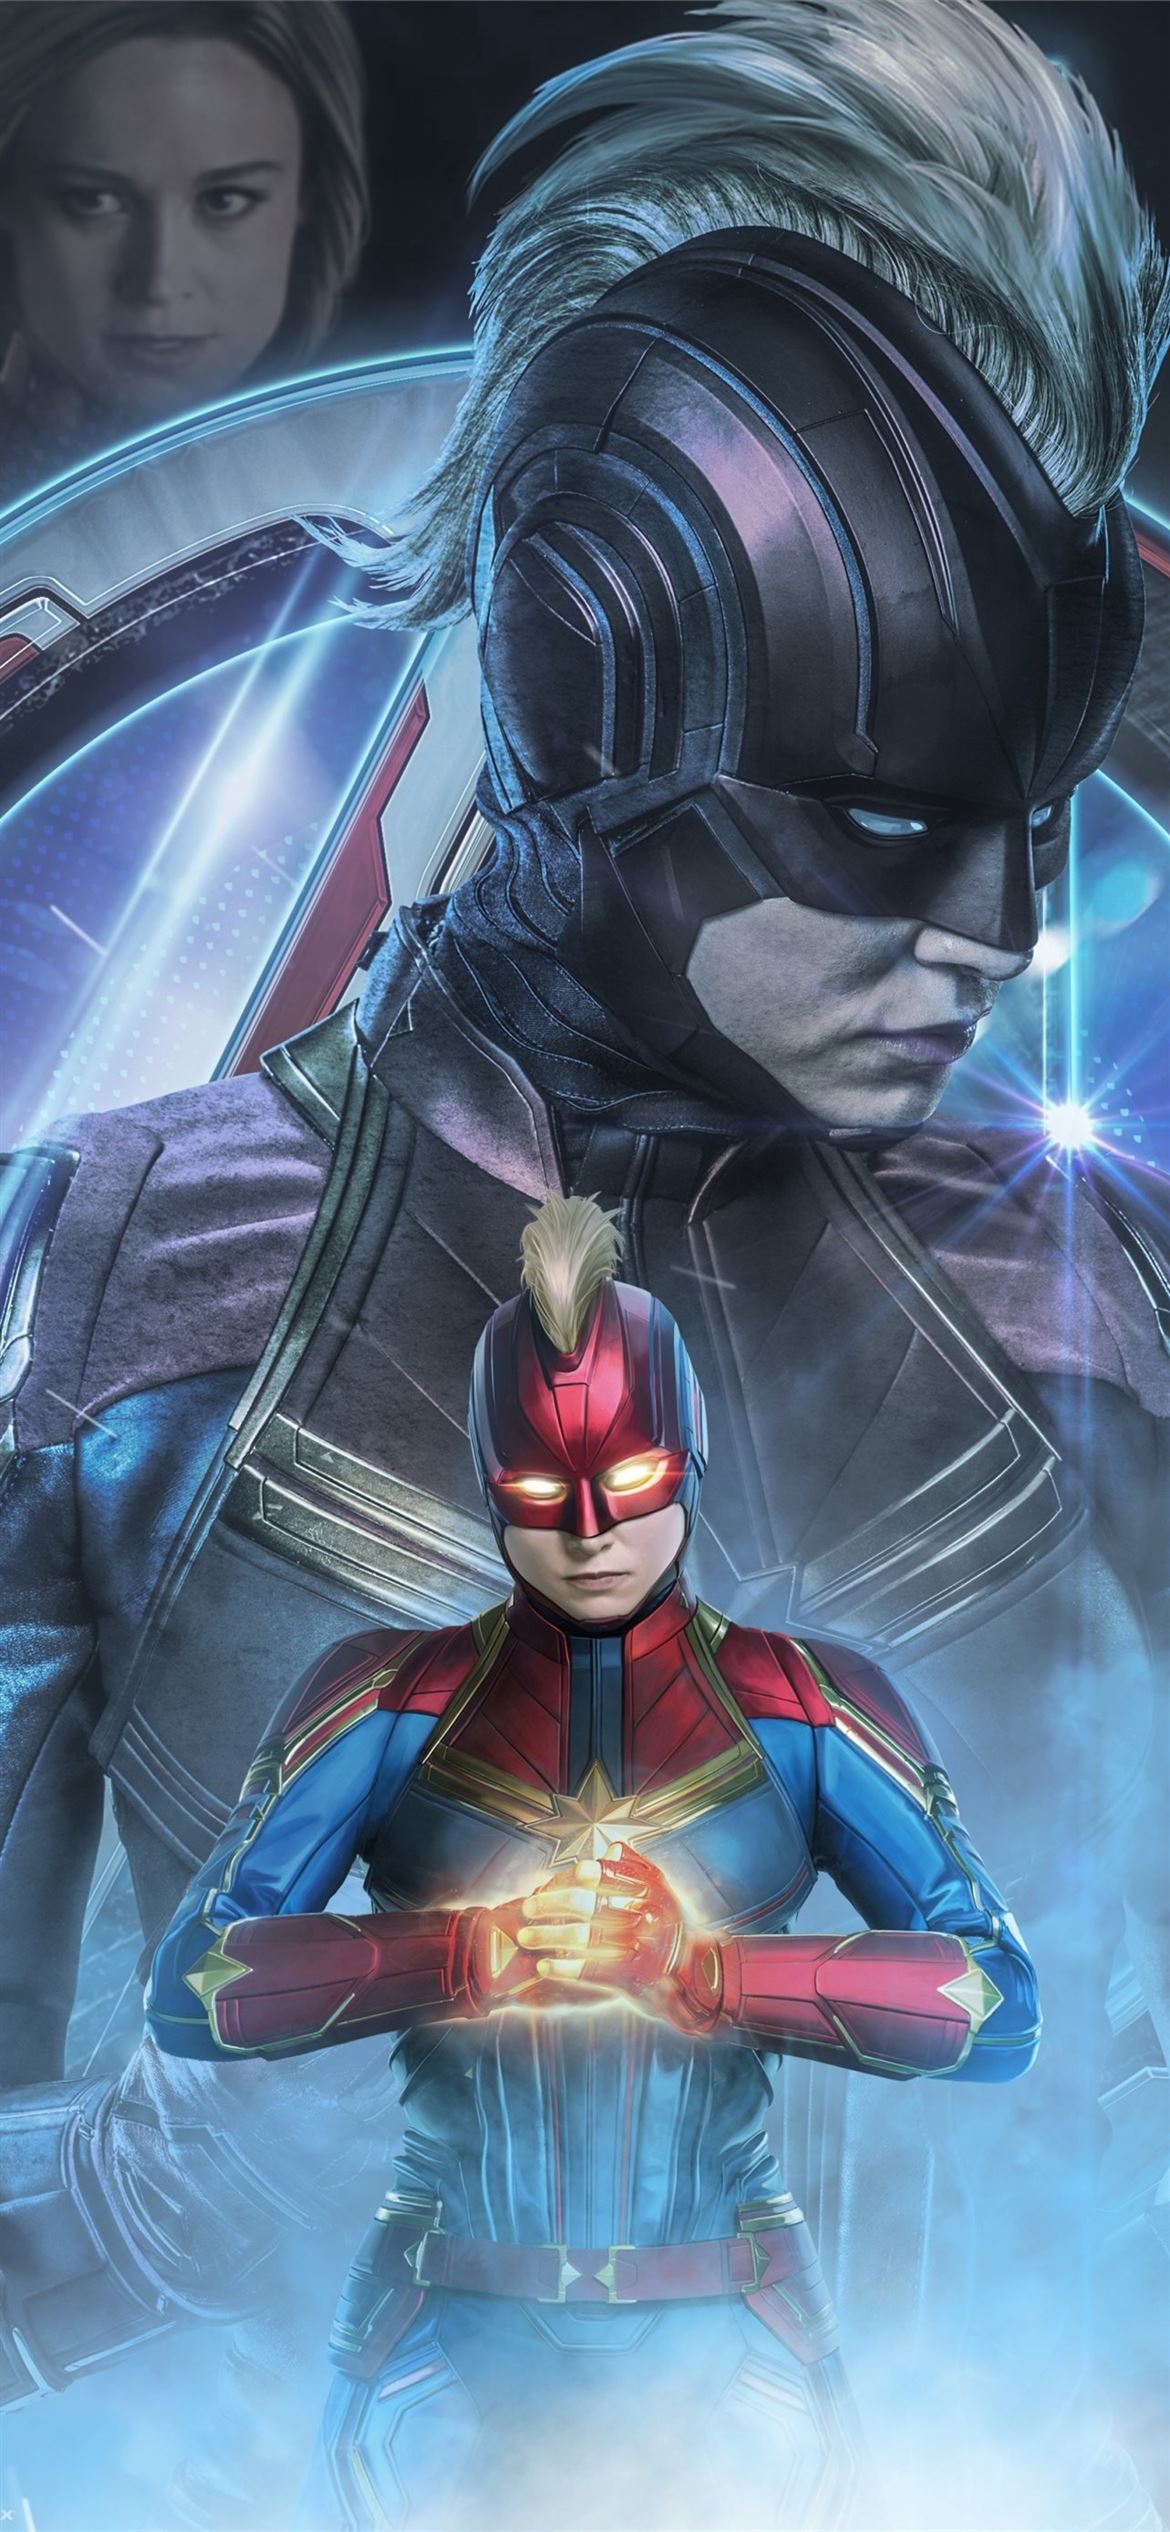 avengers endgame captain marvel movie poster art l. iPhone Wallpaper Free Download